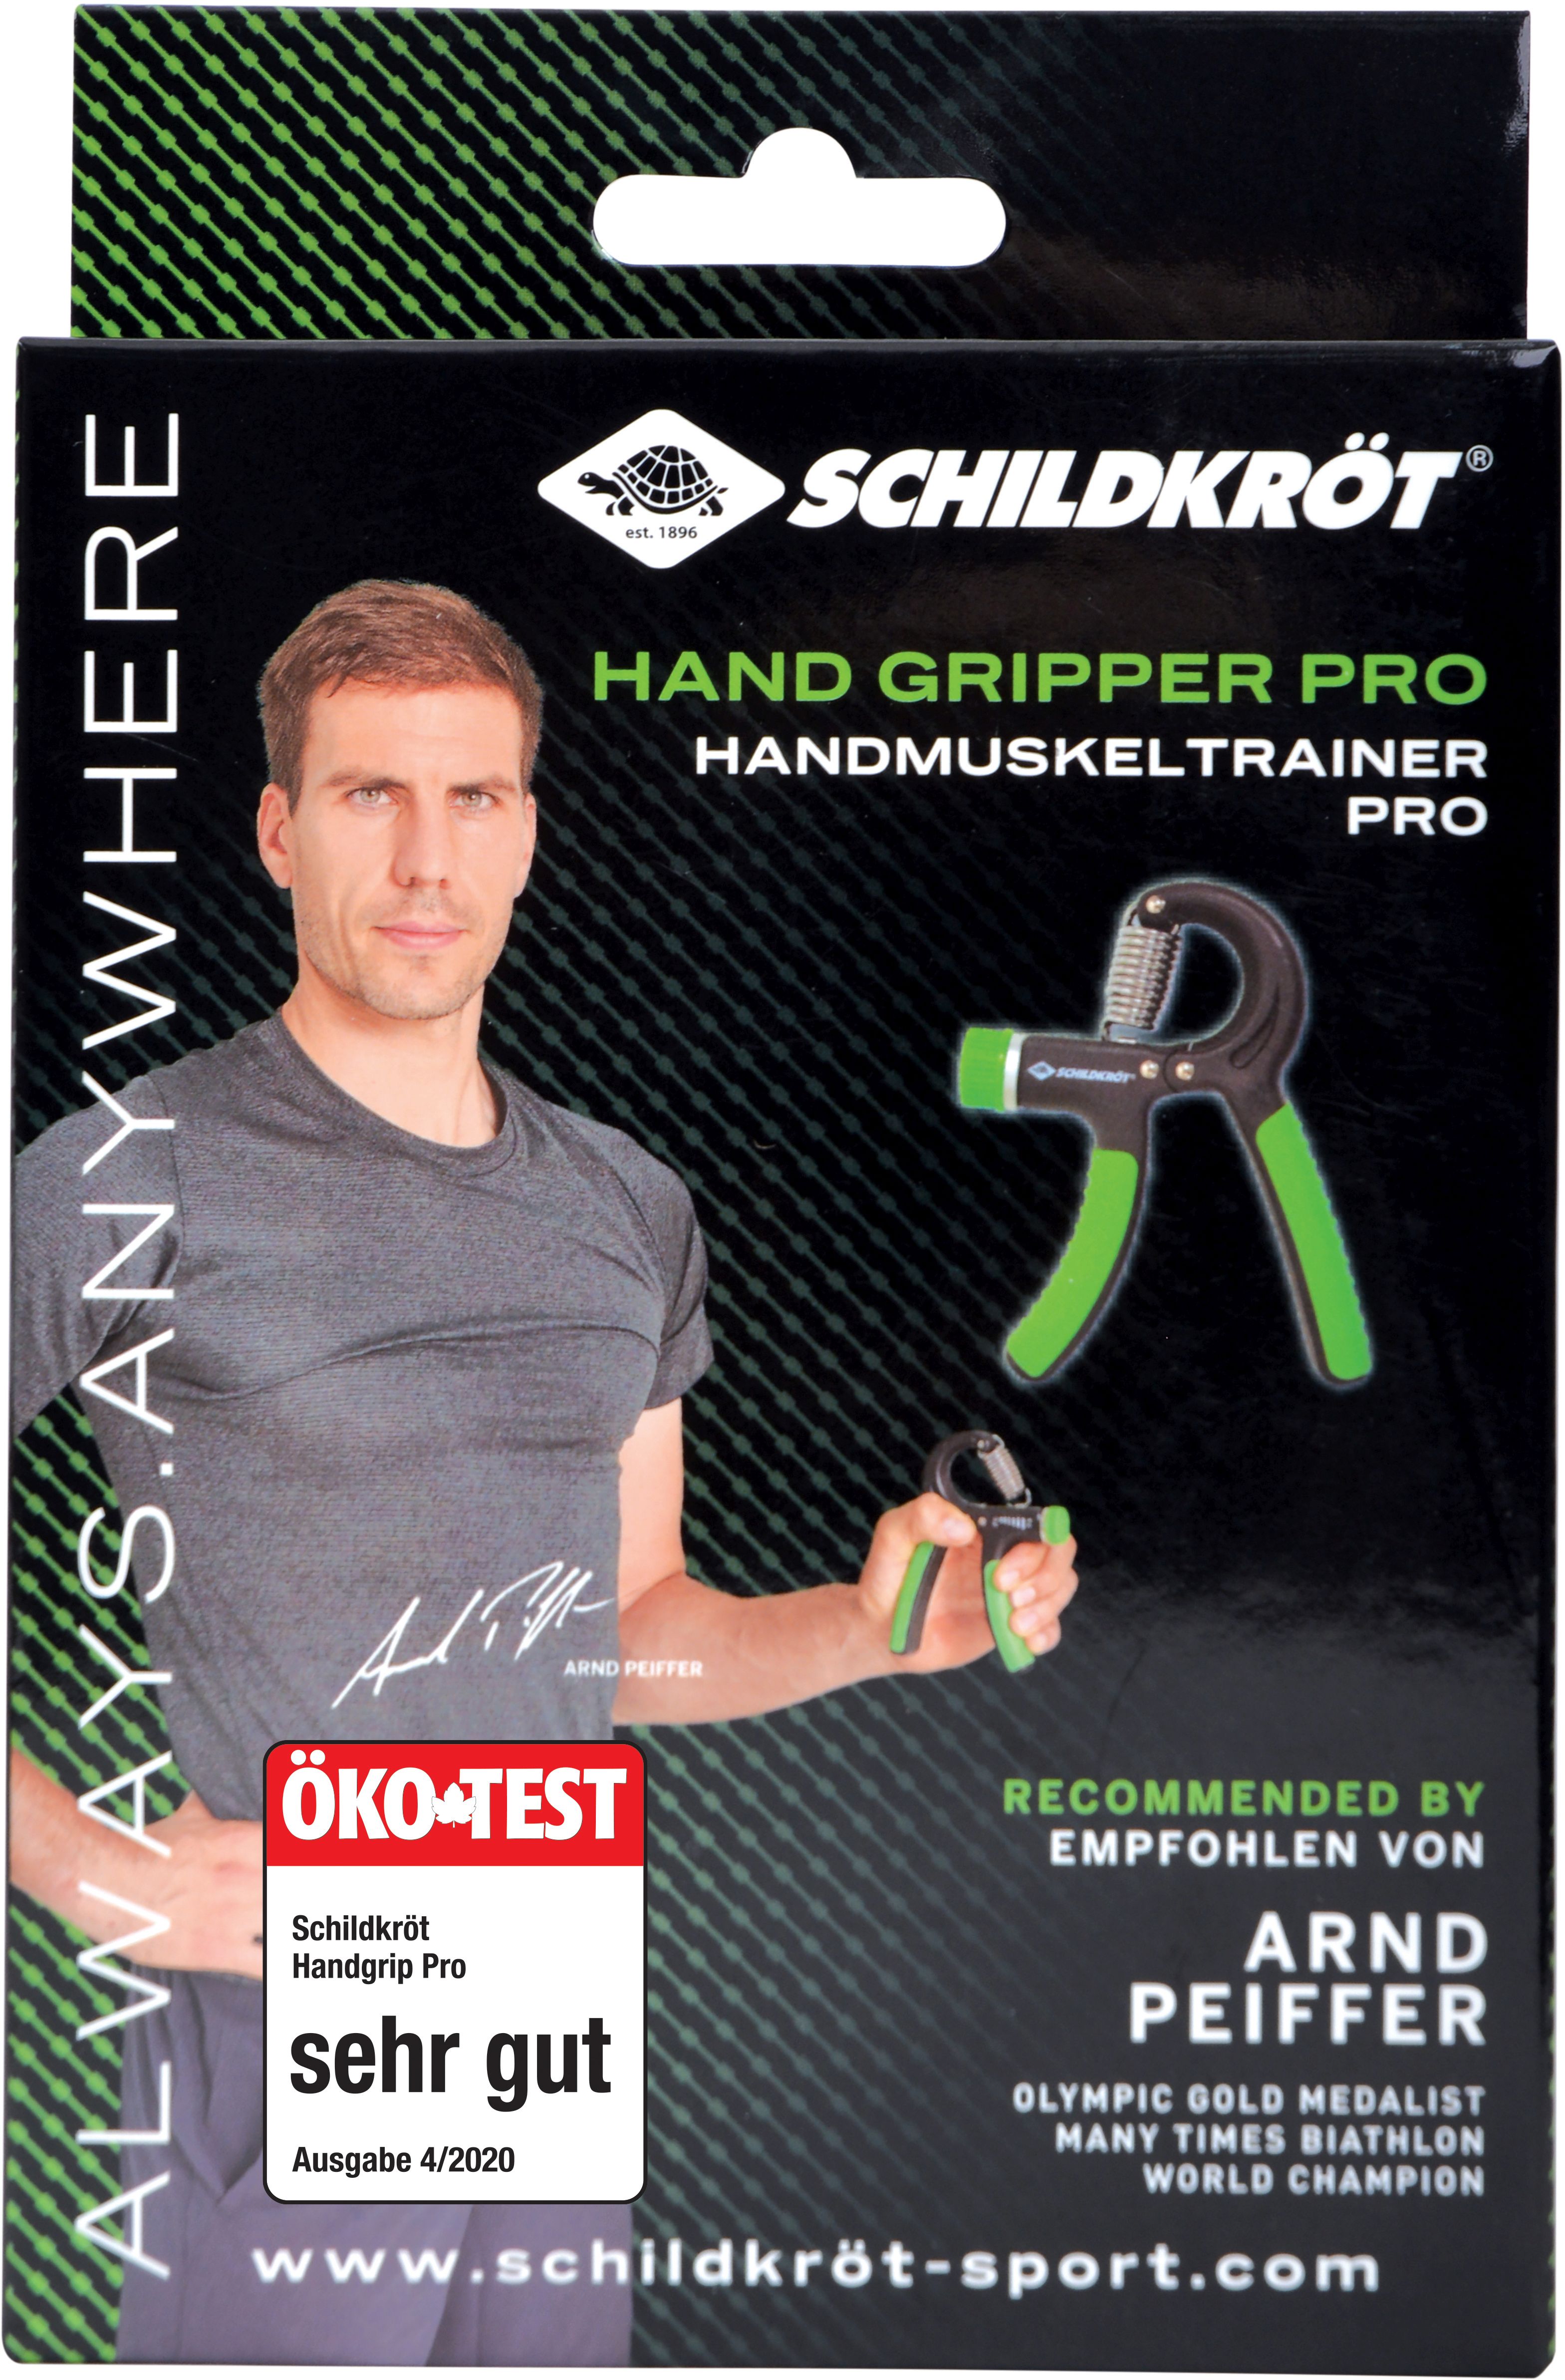 Handmuskeltrainer Pro, Hand Grip Pro,